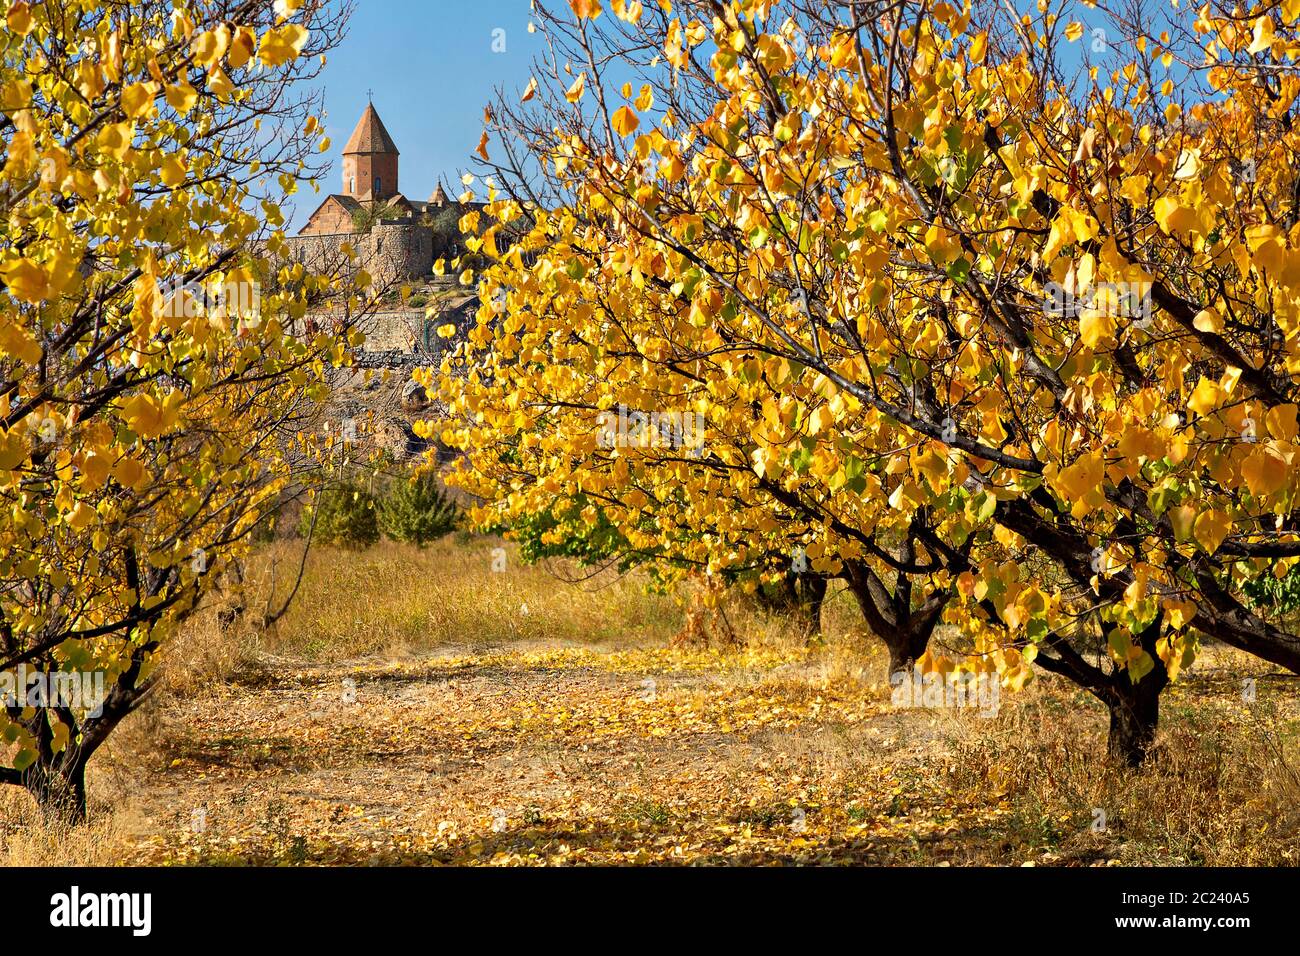 Khor Virap Monastery through leaves with fall colors, Armenia Stock Photo